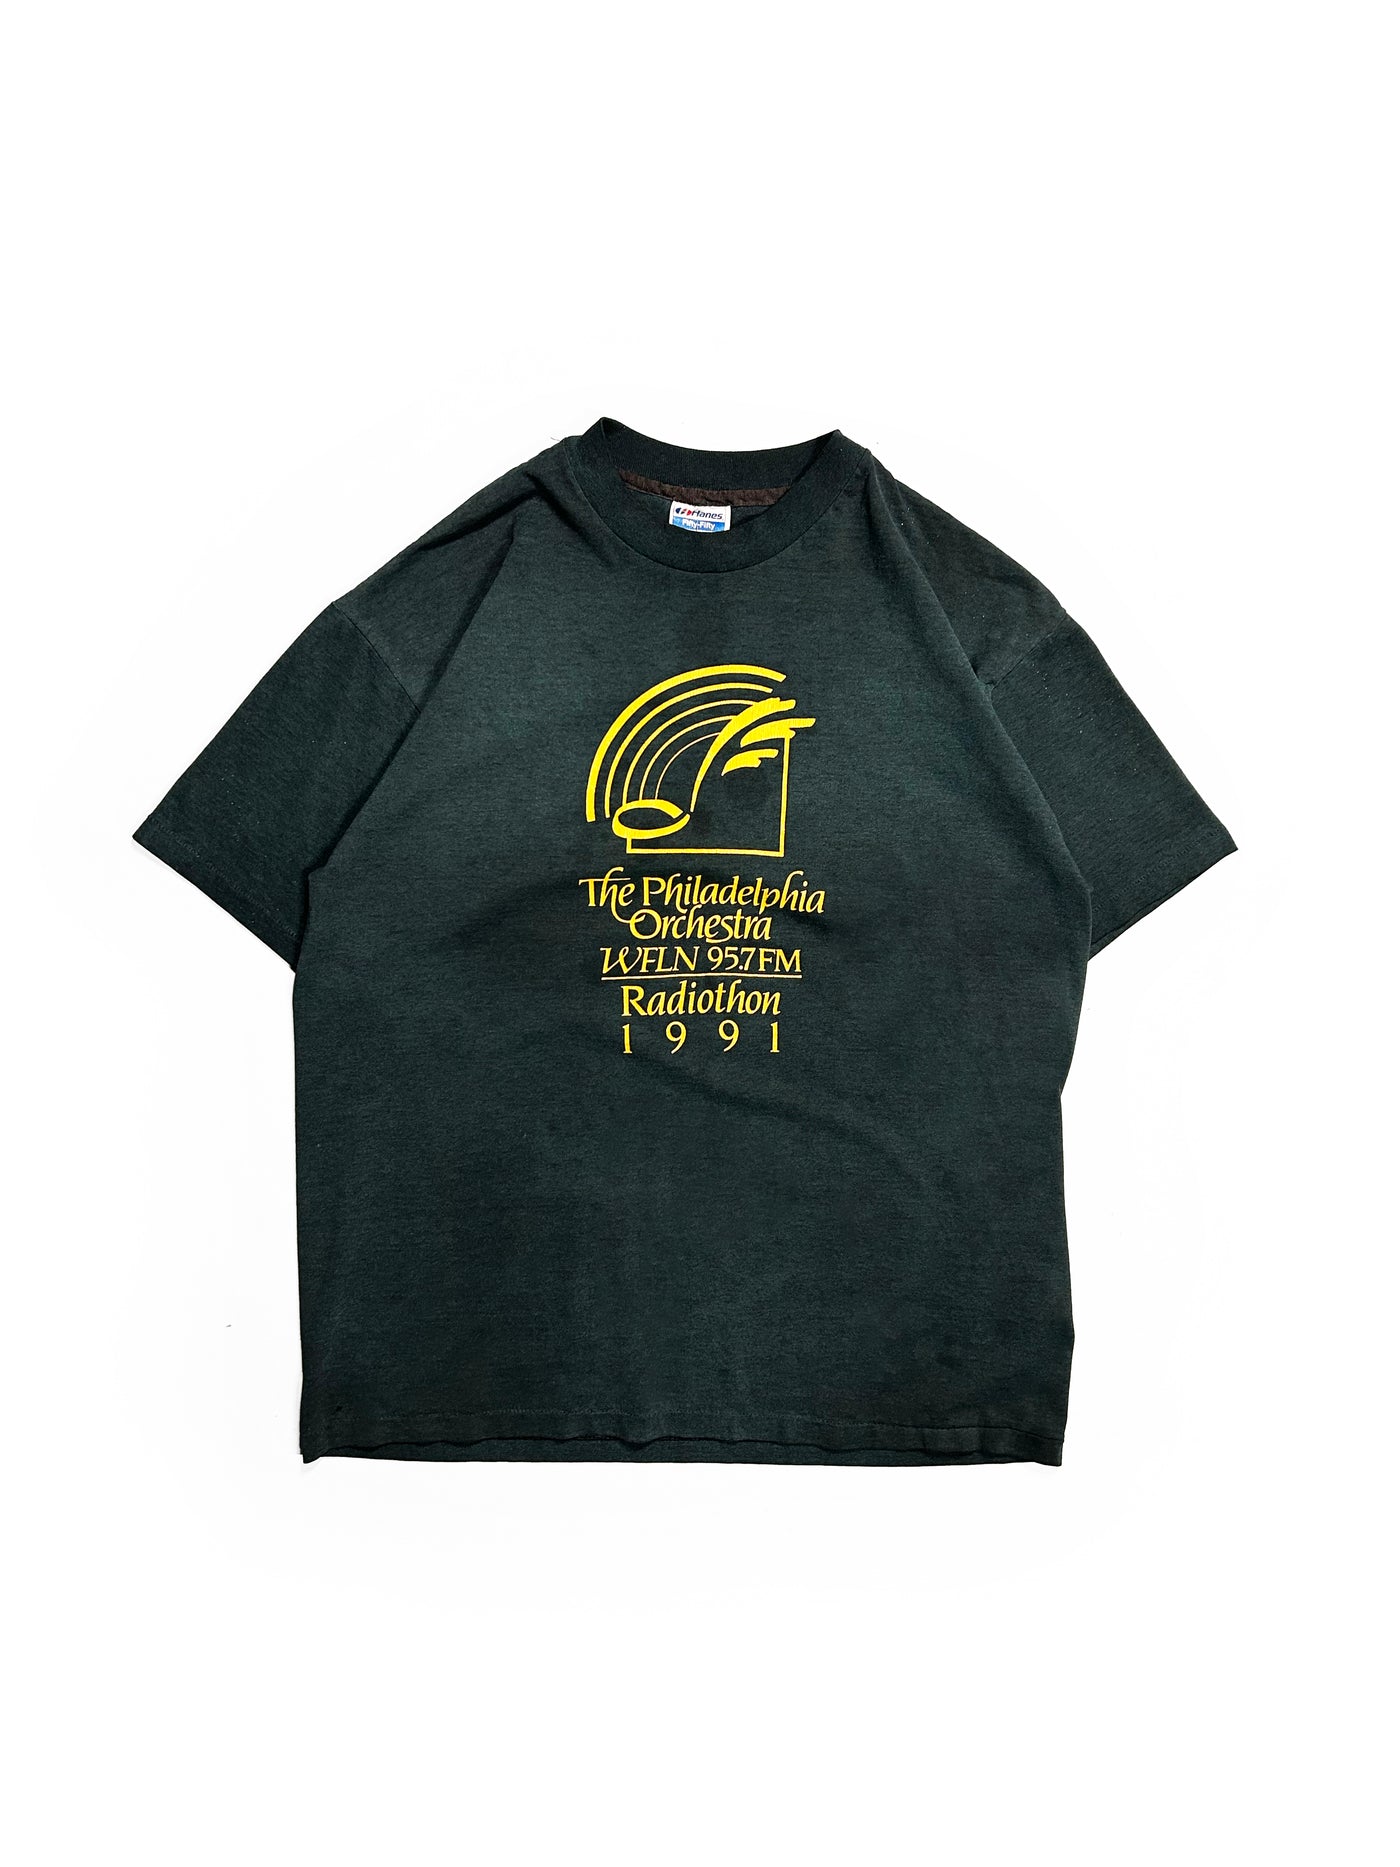 Vintage 1991 Philadelphia Orchestra T-Shirt